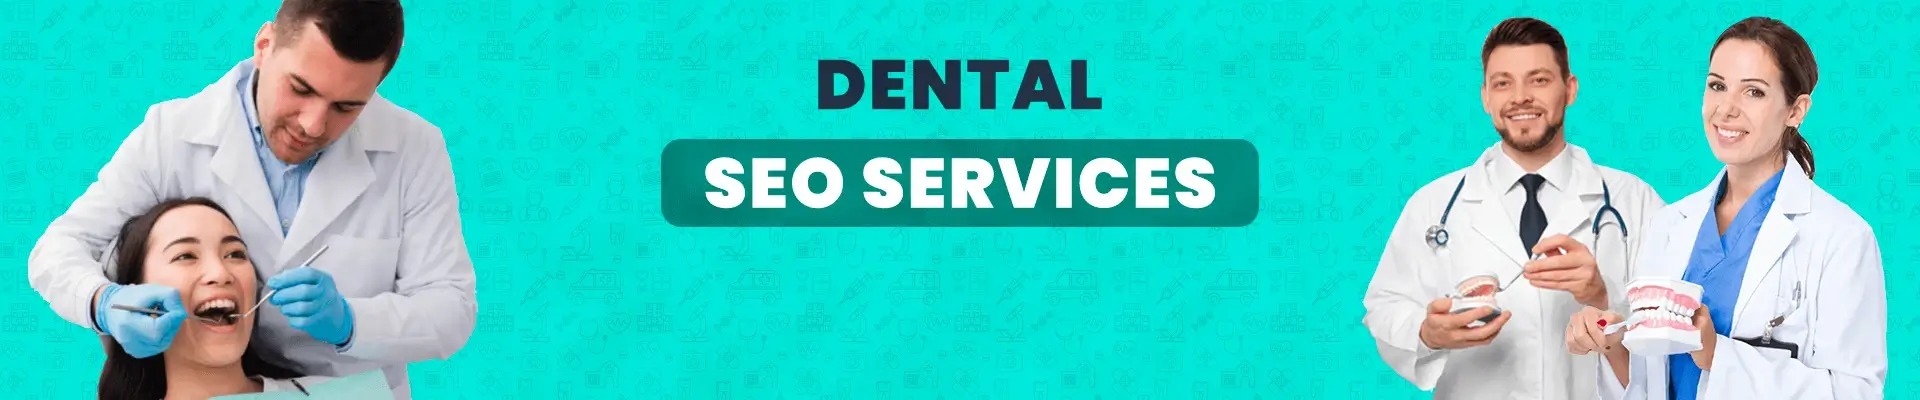 Best Dental SEO Services Company